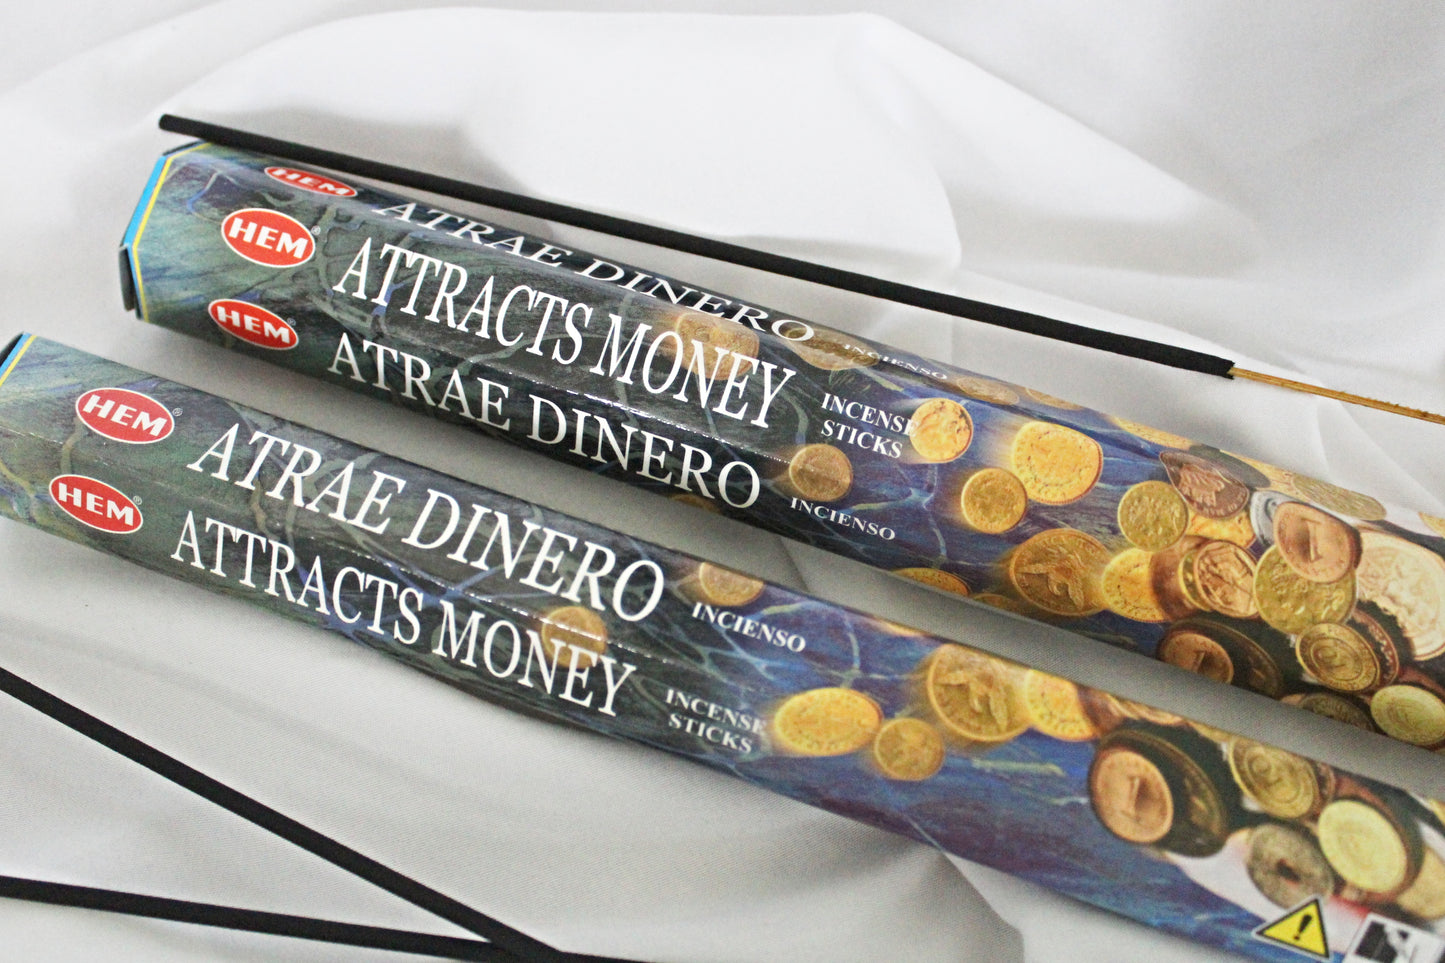 Attract Money Incense Sticks